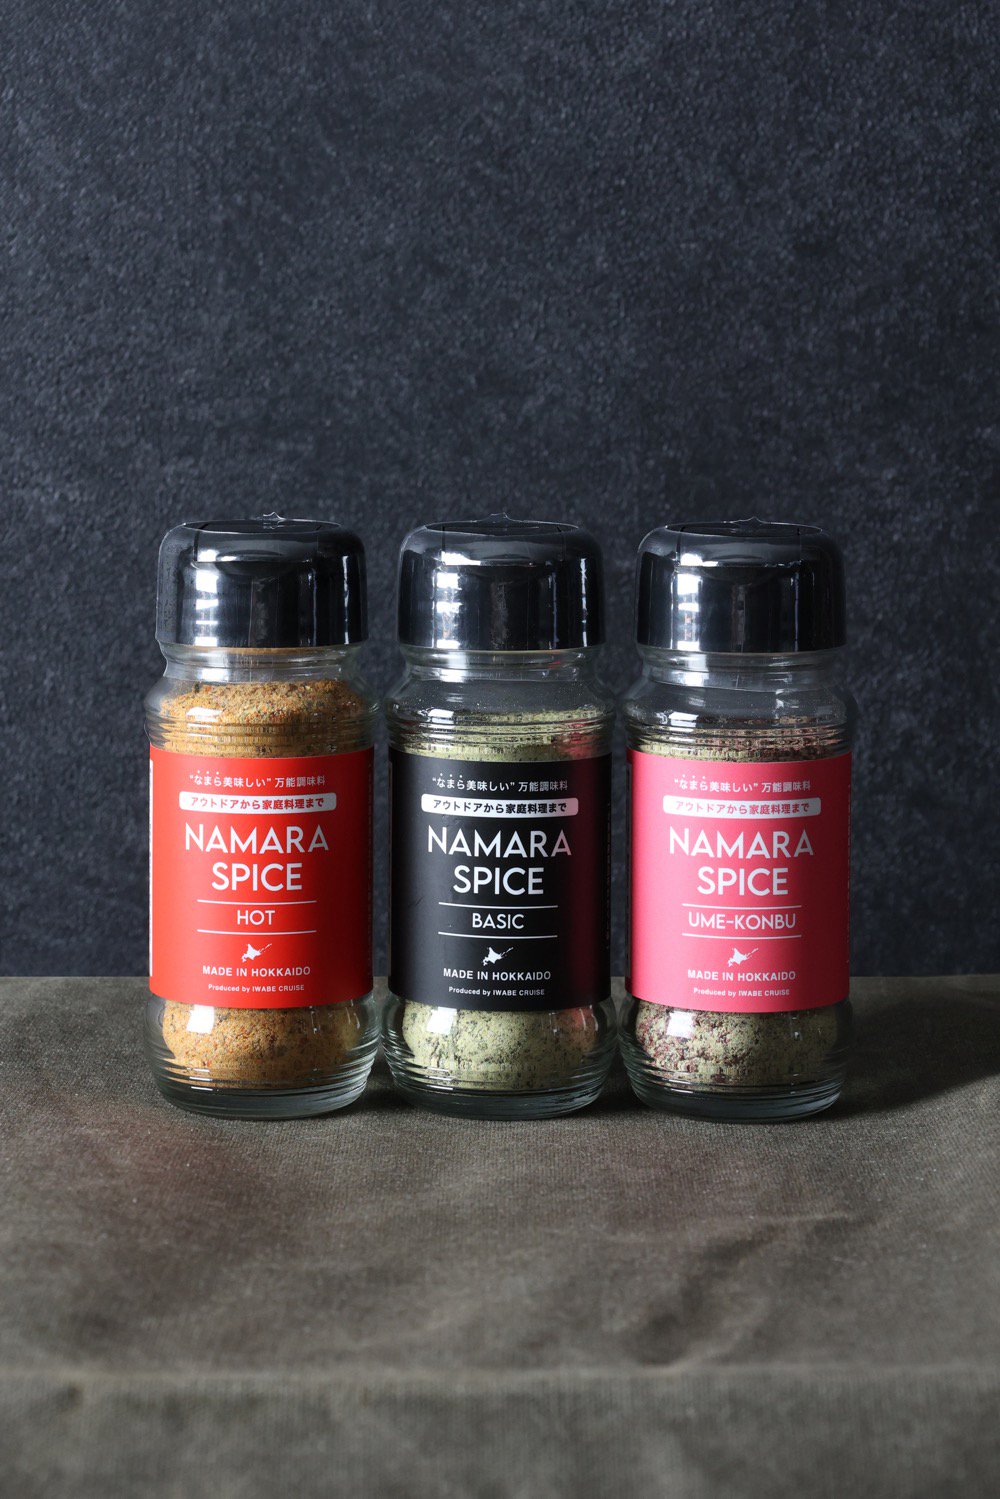 Namara Spice 3 piece set